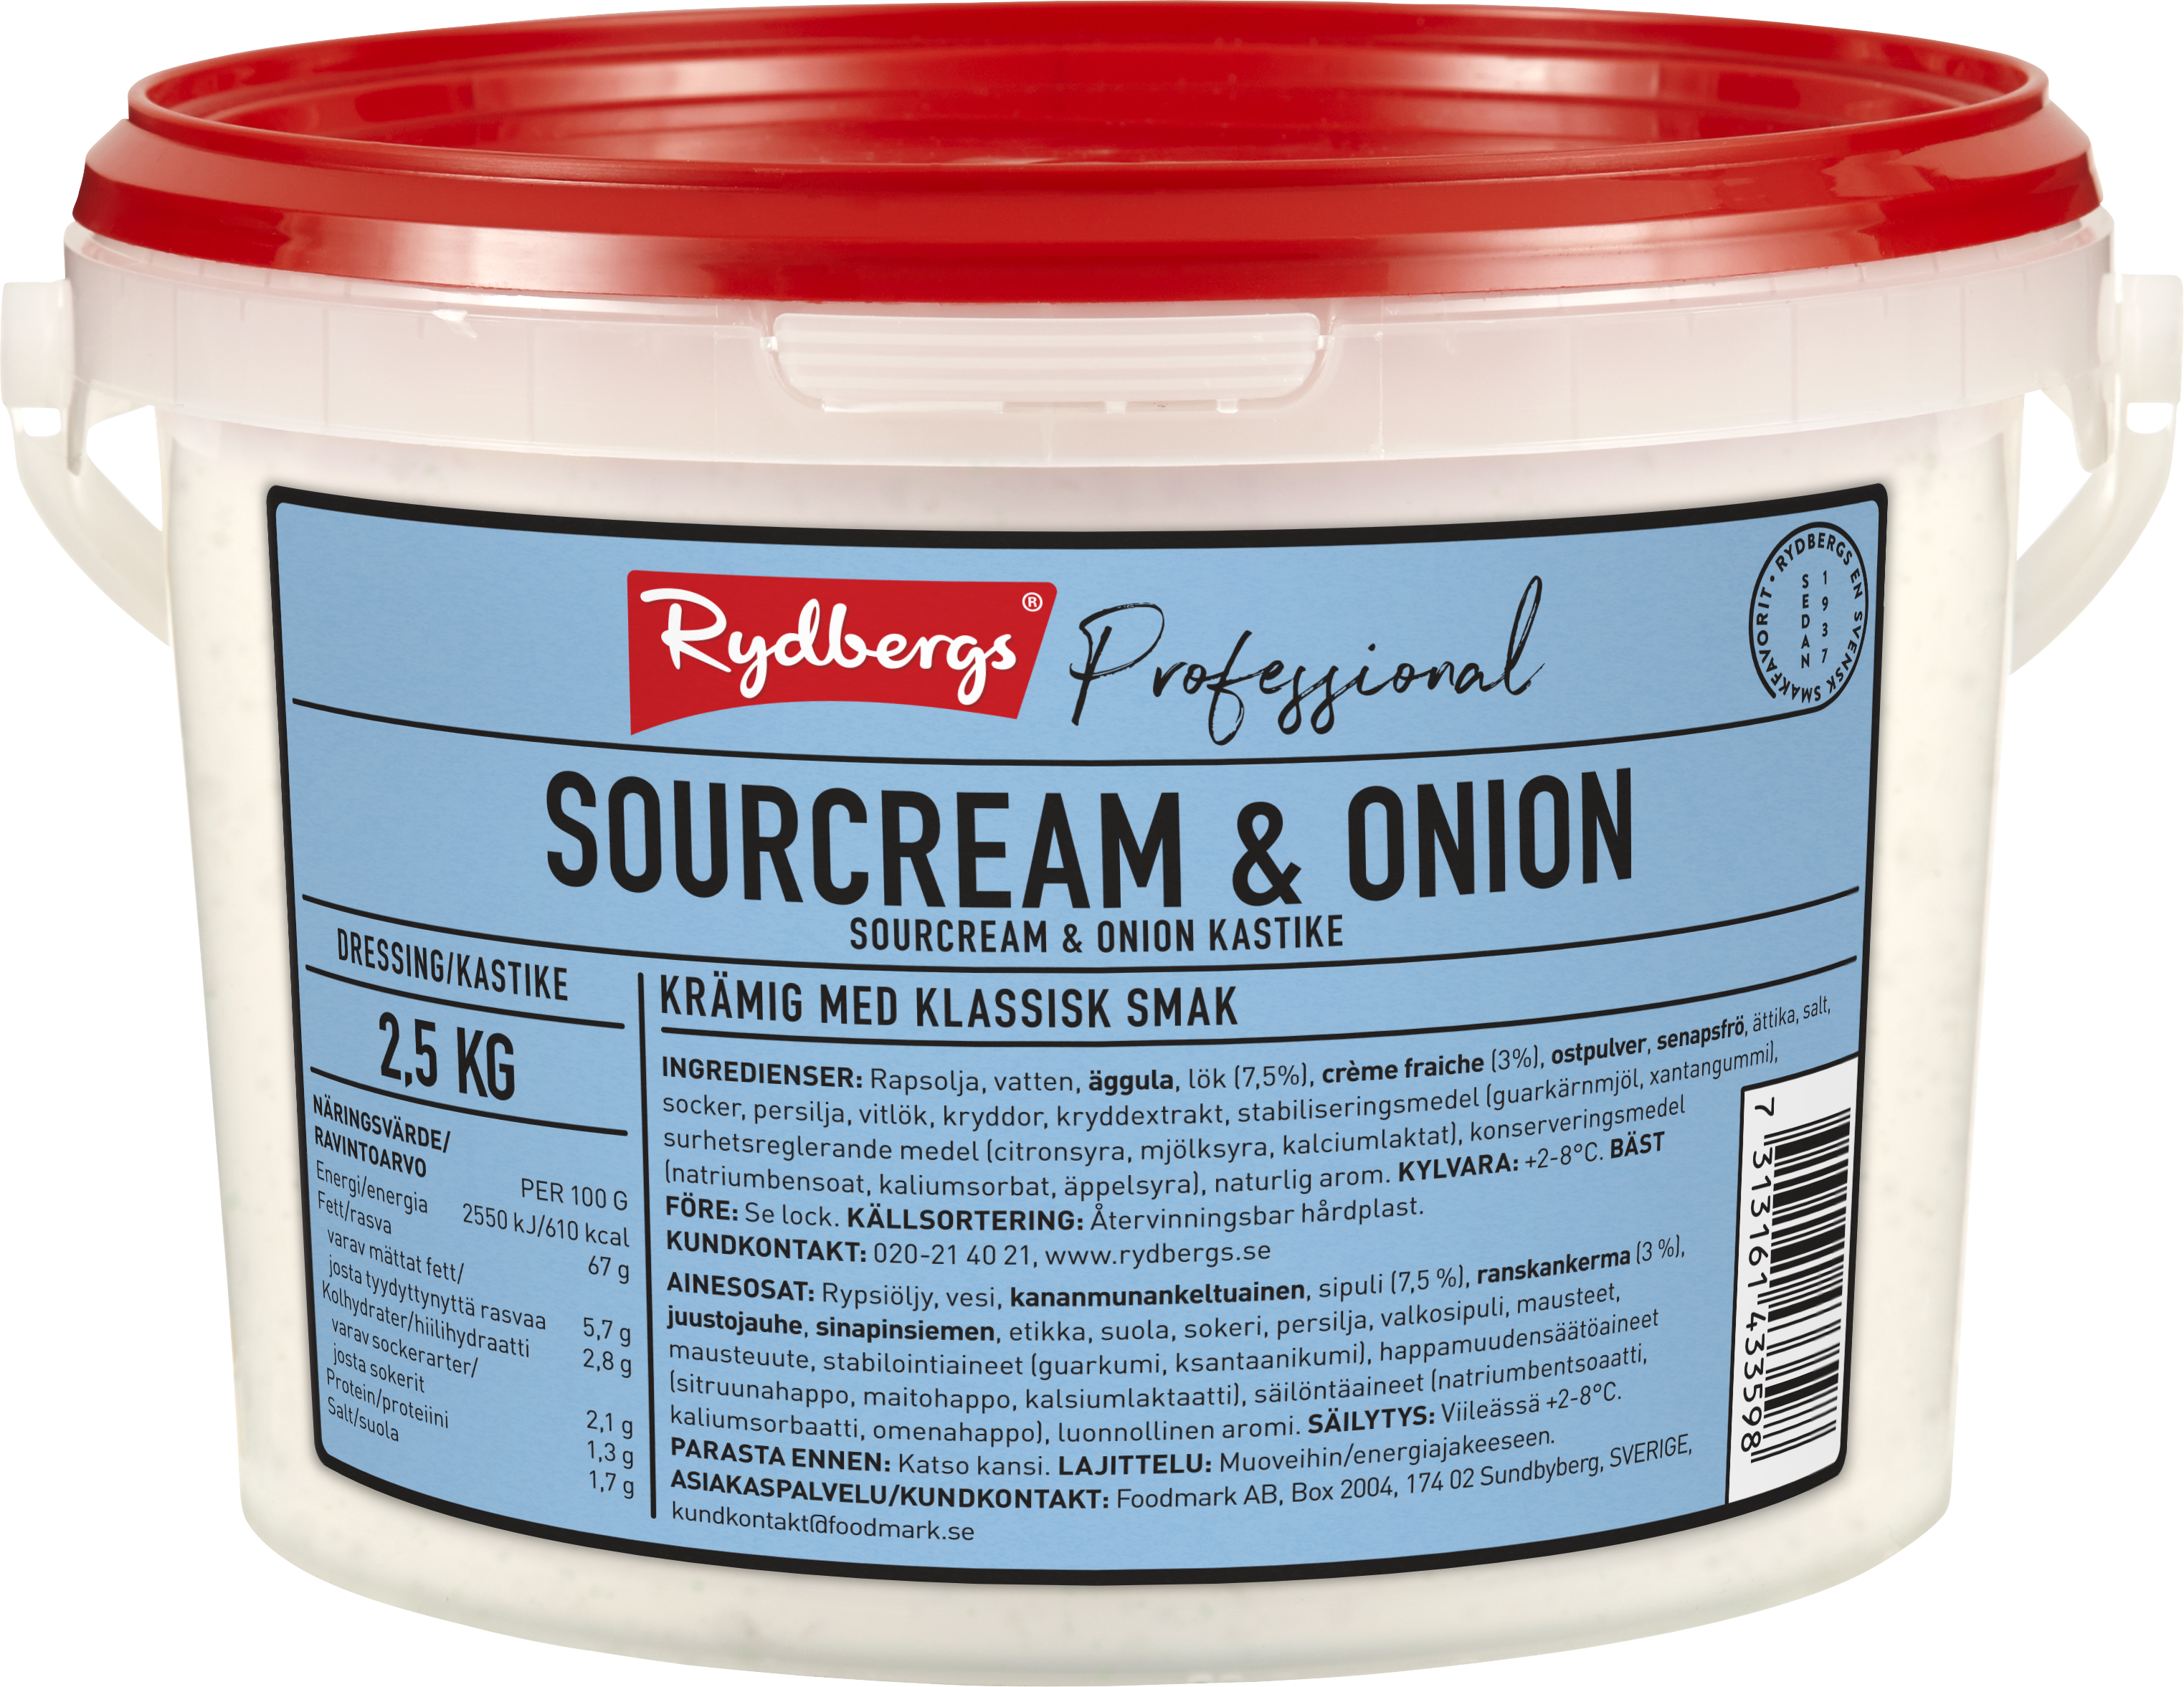 Rydbergs Sourcream & Onion -kastike 2,5 kg - 